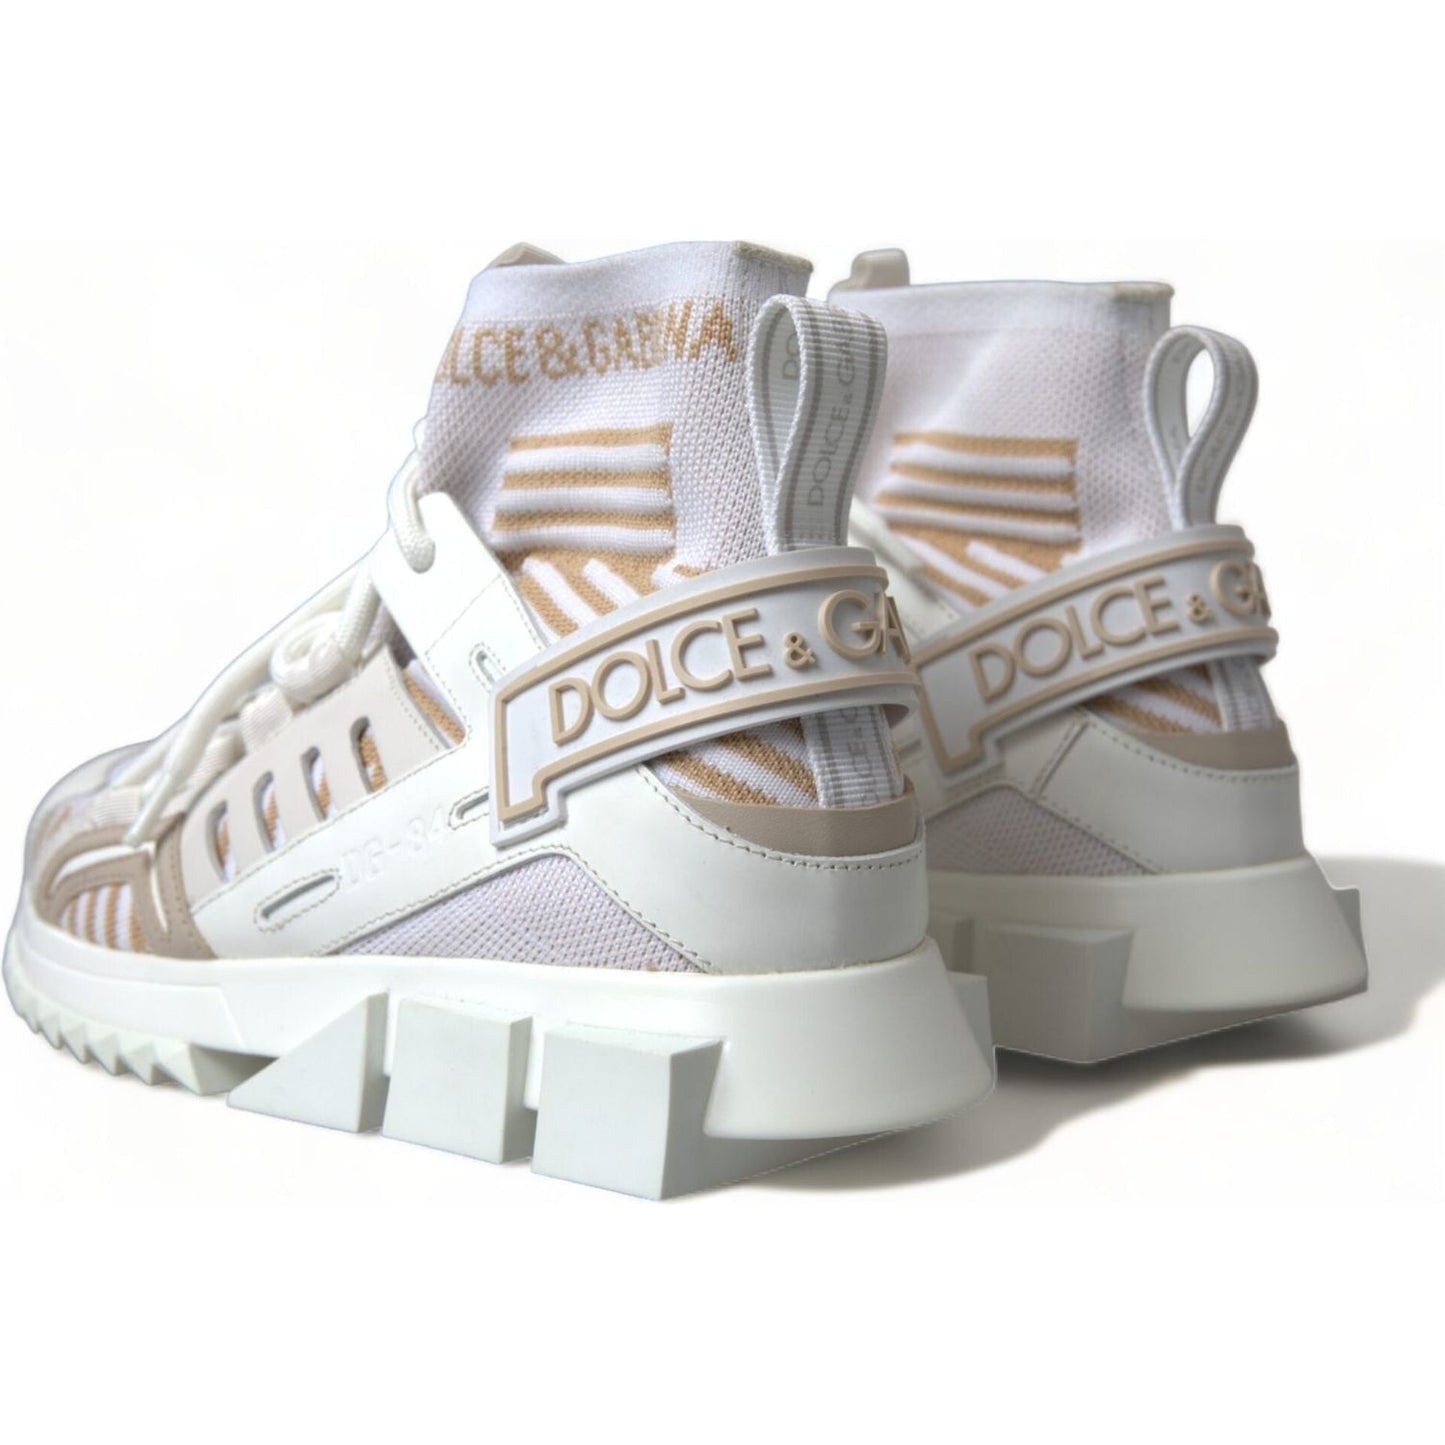 Dolce & Gabbana Elegant Sorrento Slip-On Sneakers white-beige-sorrento-socks-sneakers-shoes 465A2044-BG-scaled-f810cee8-e8a.jpg